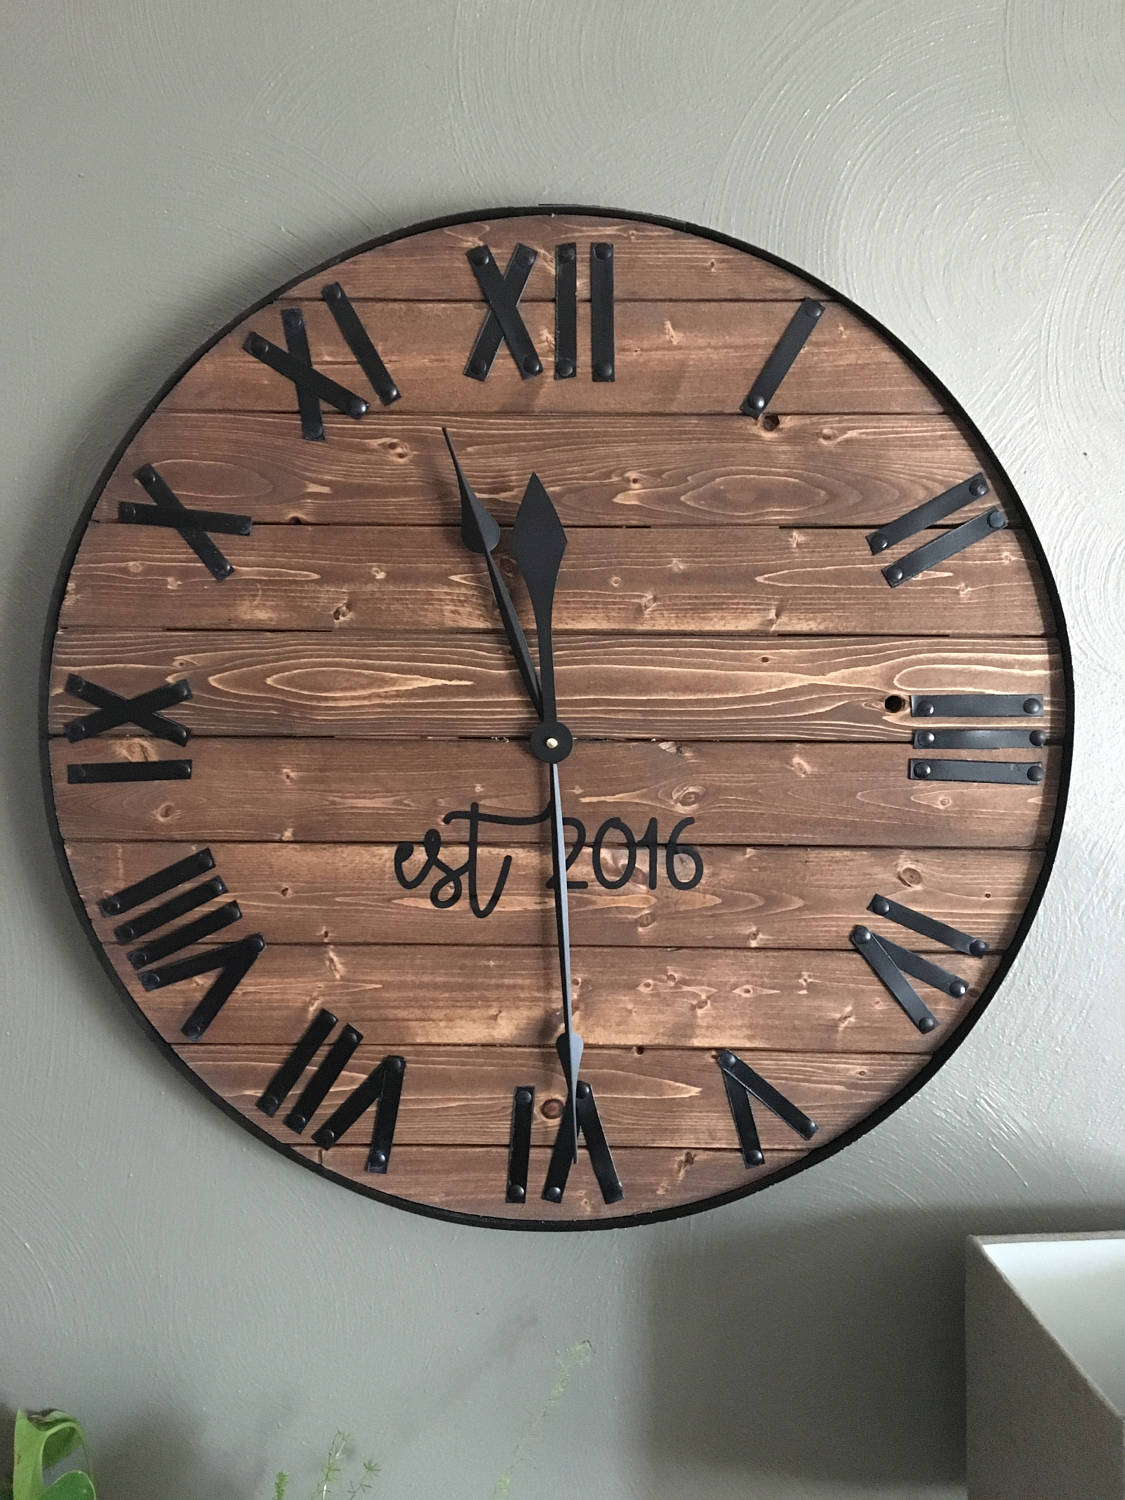 Creative Handmade Wall Clock Designs You Will Want To Diy